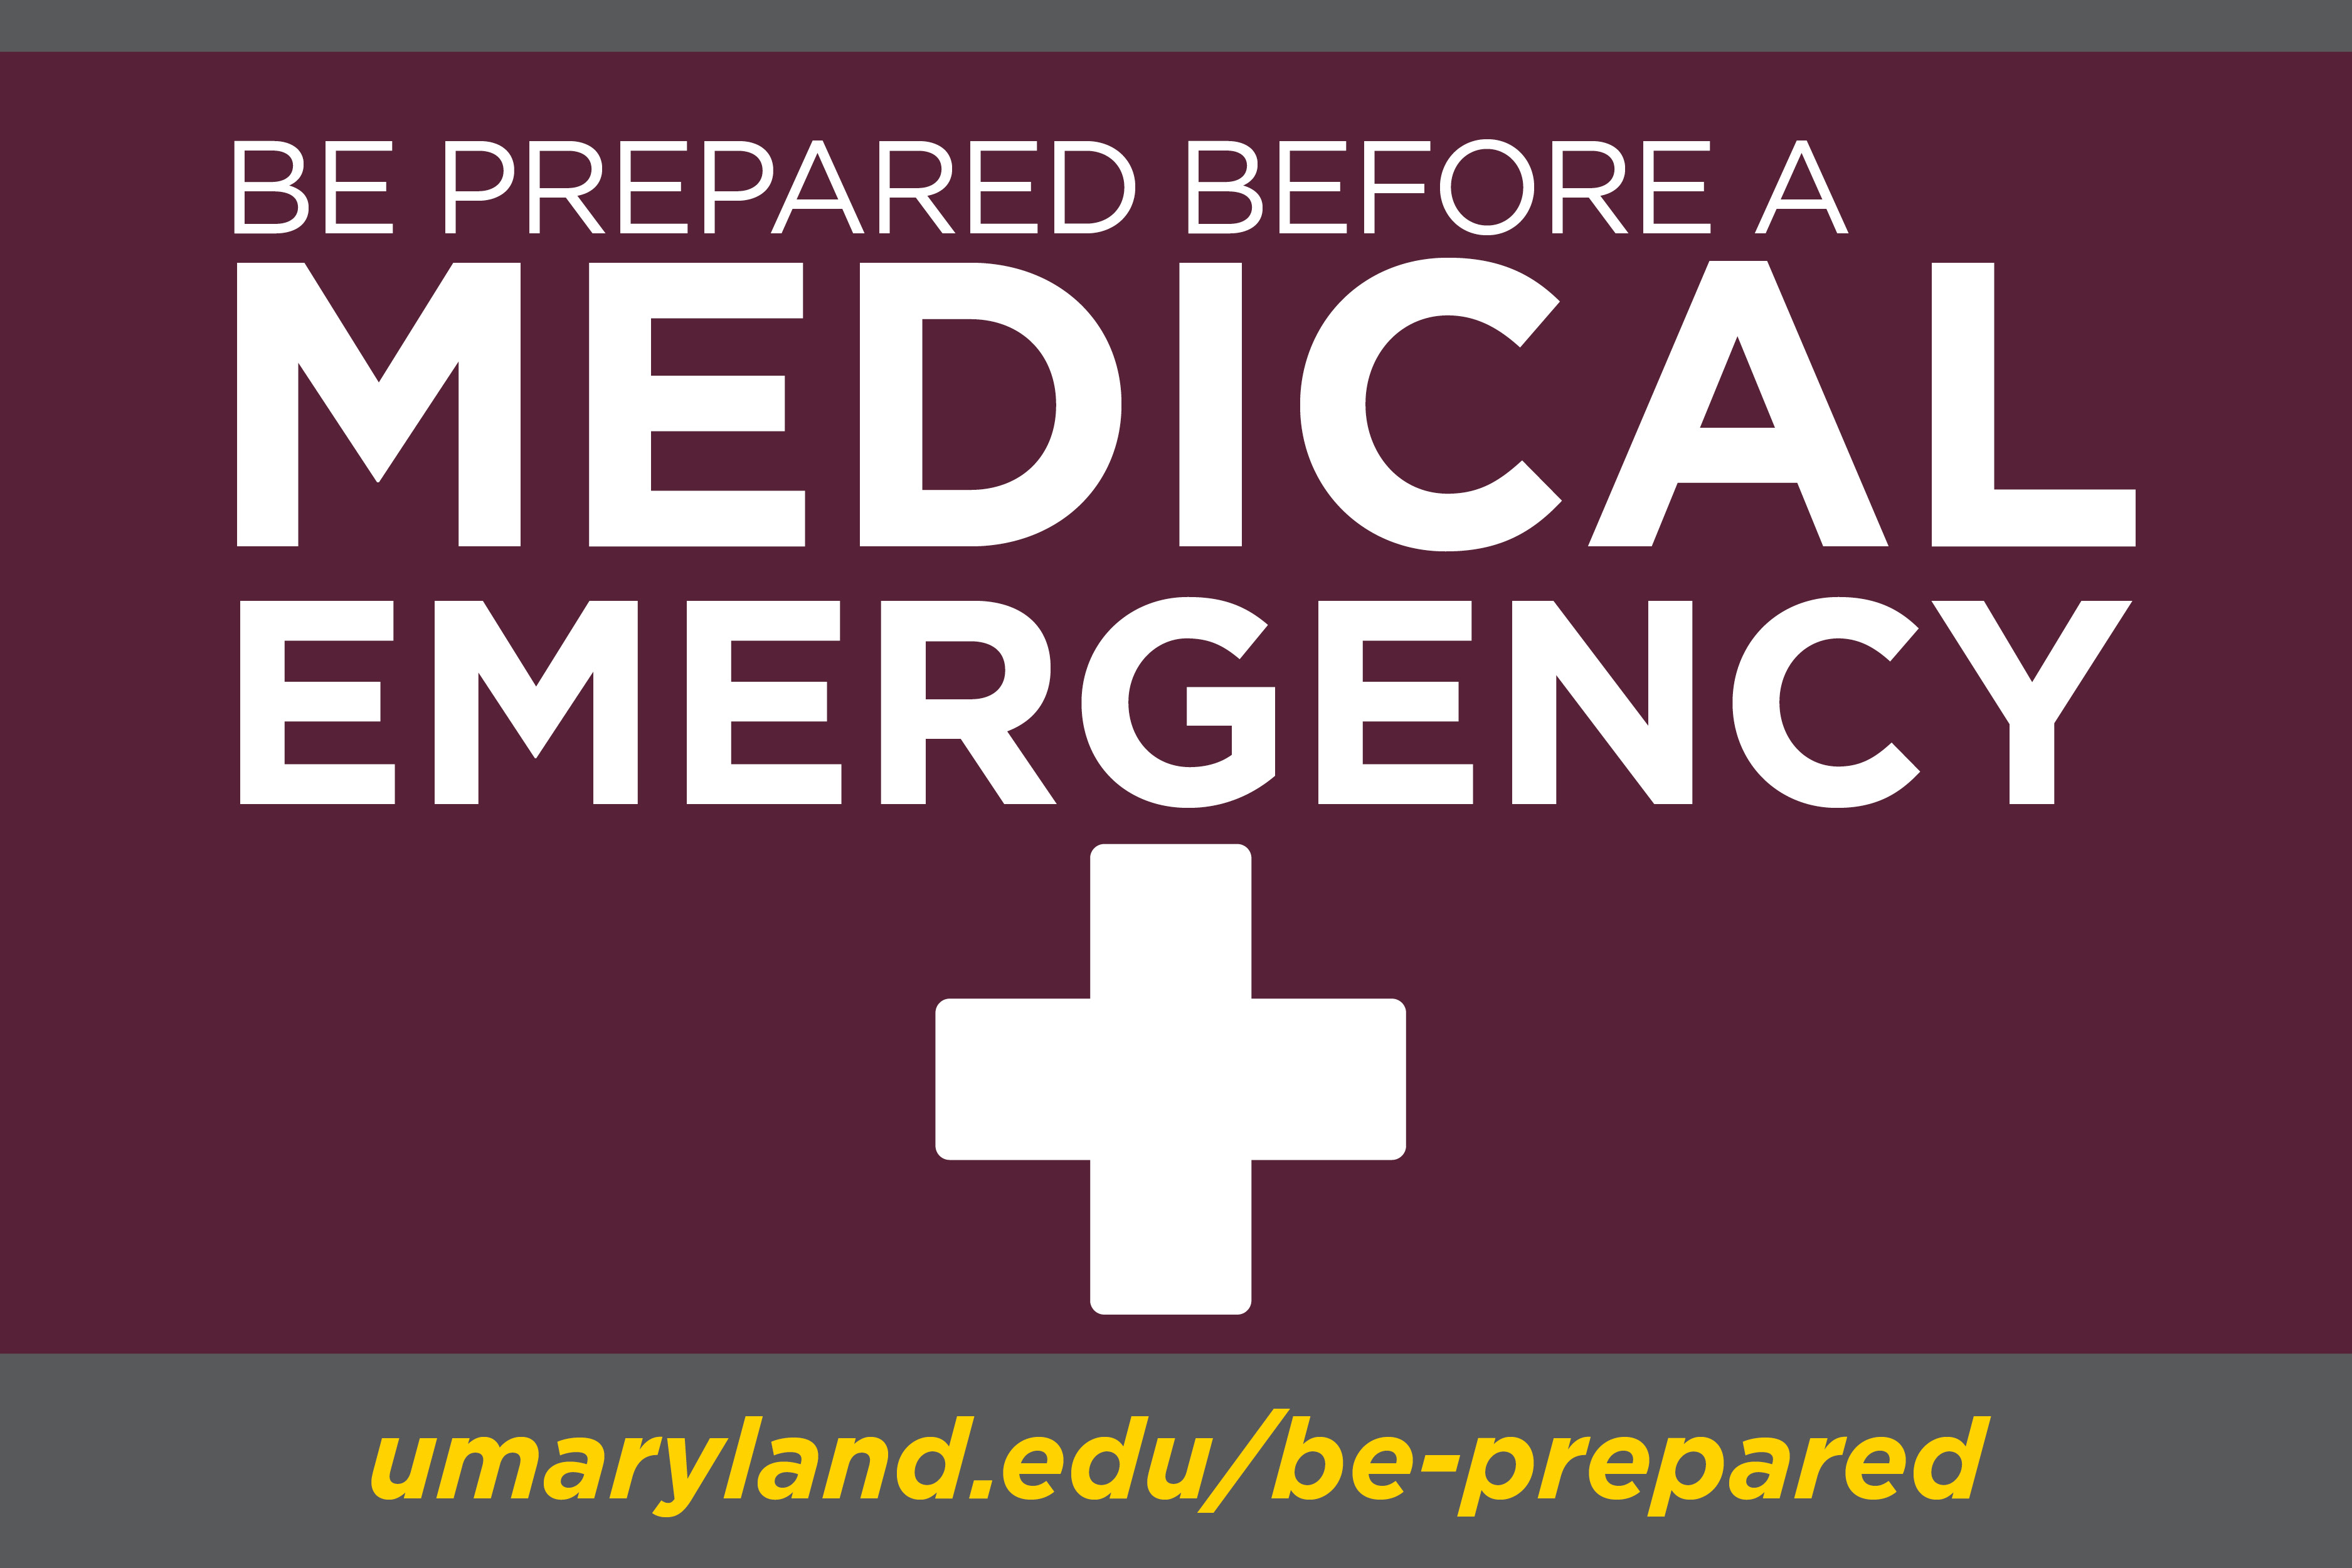 Be prepared before a medical emergency, Visit umaryland.edu/be-prepared to learn more.